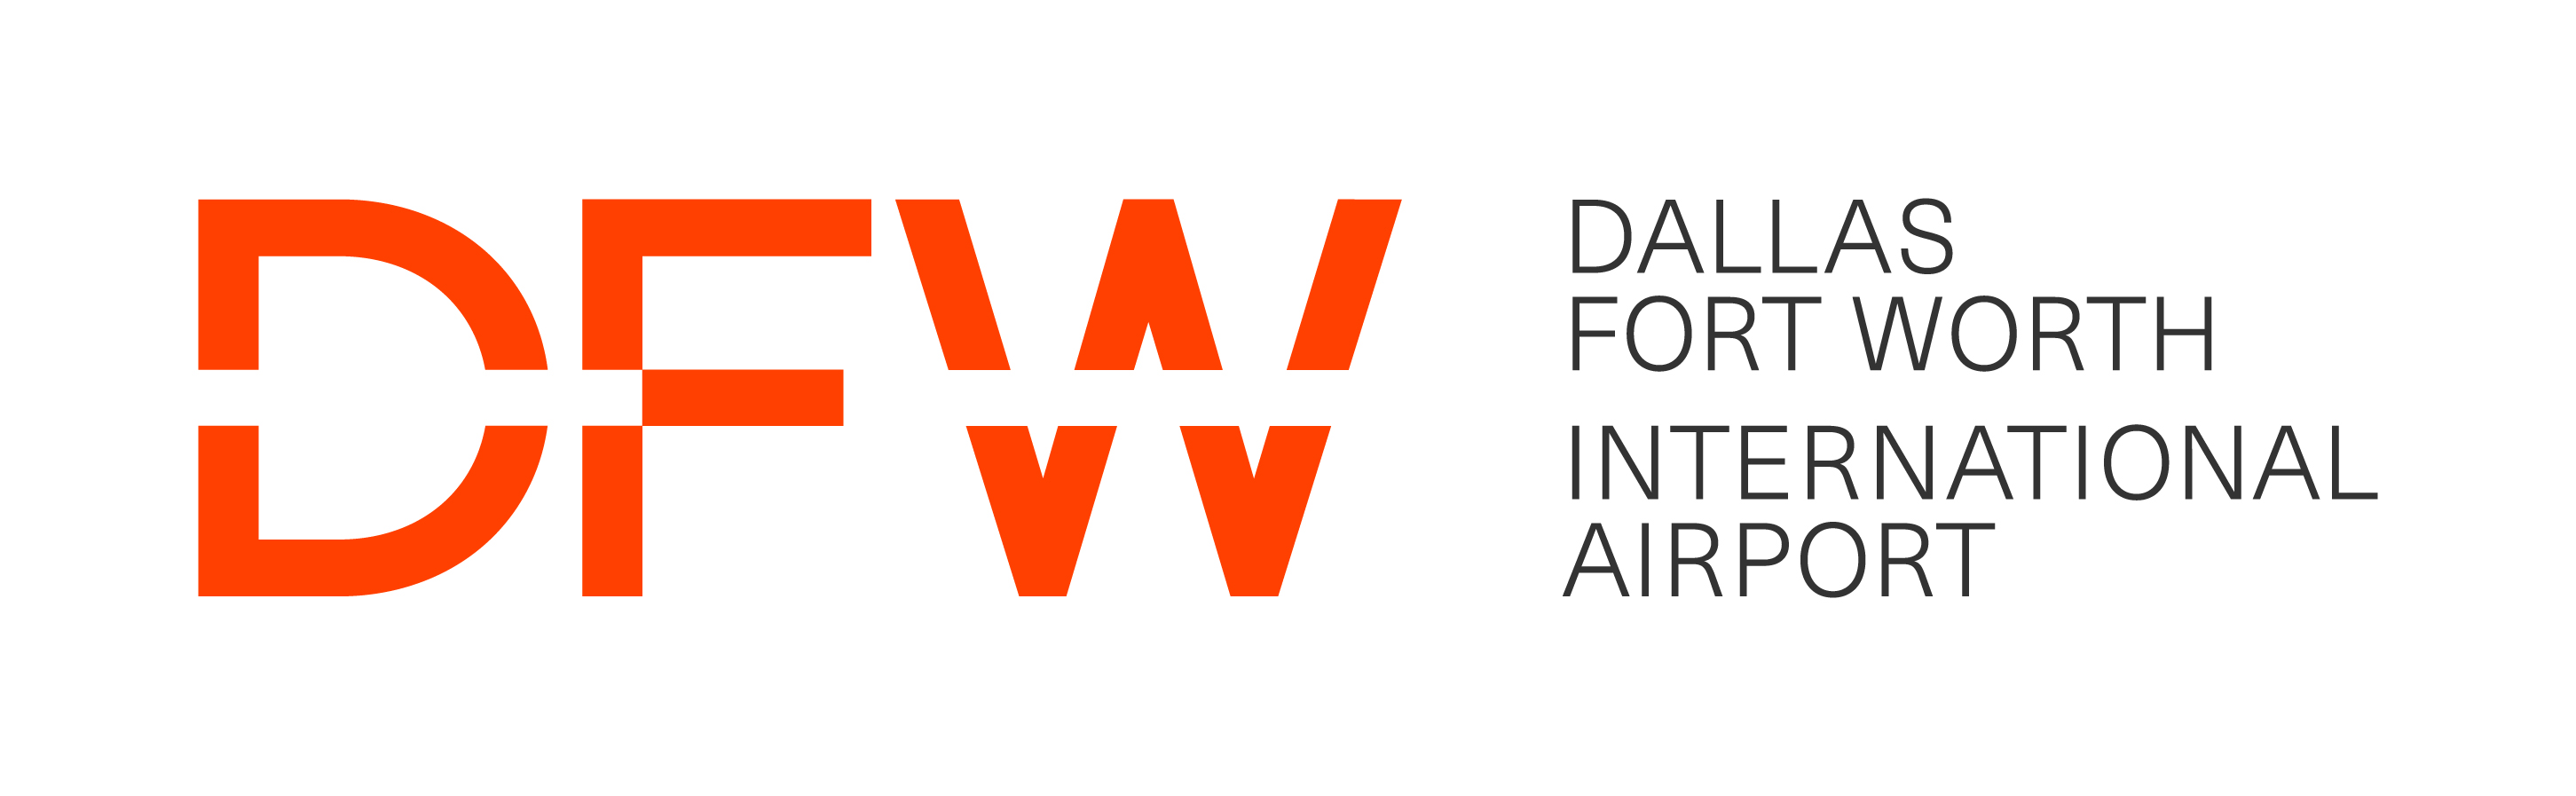 DFW International Airport - Vivid Sydney 2019